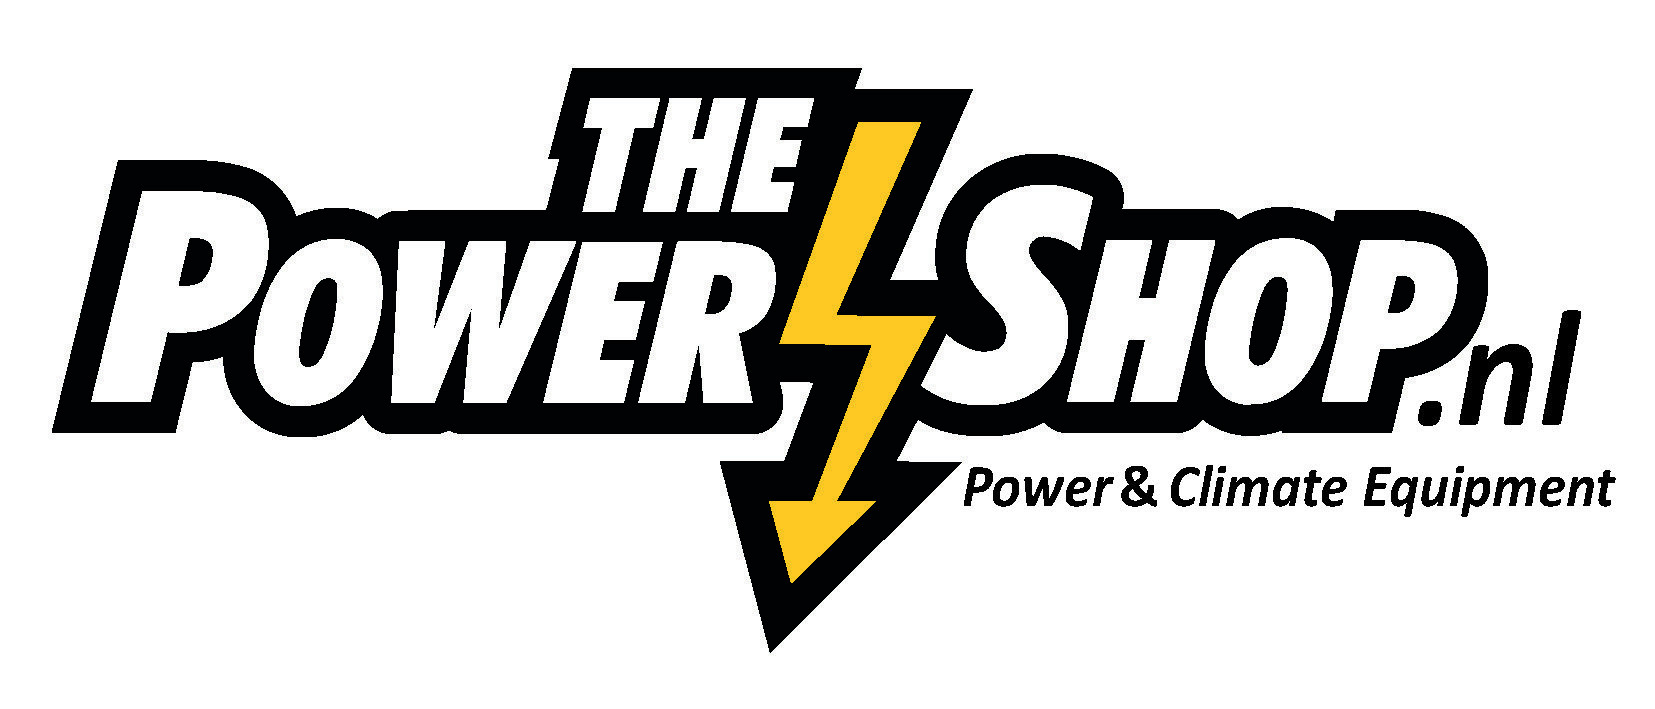 The Powershop logo